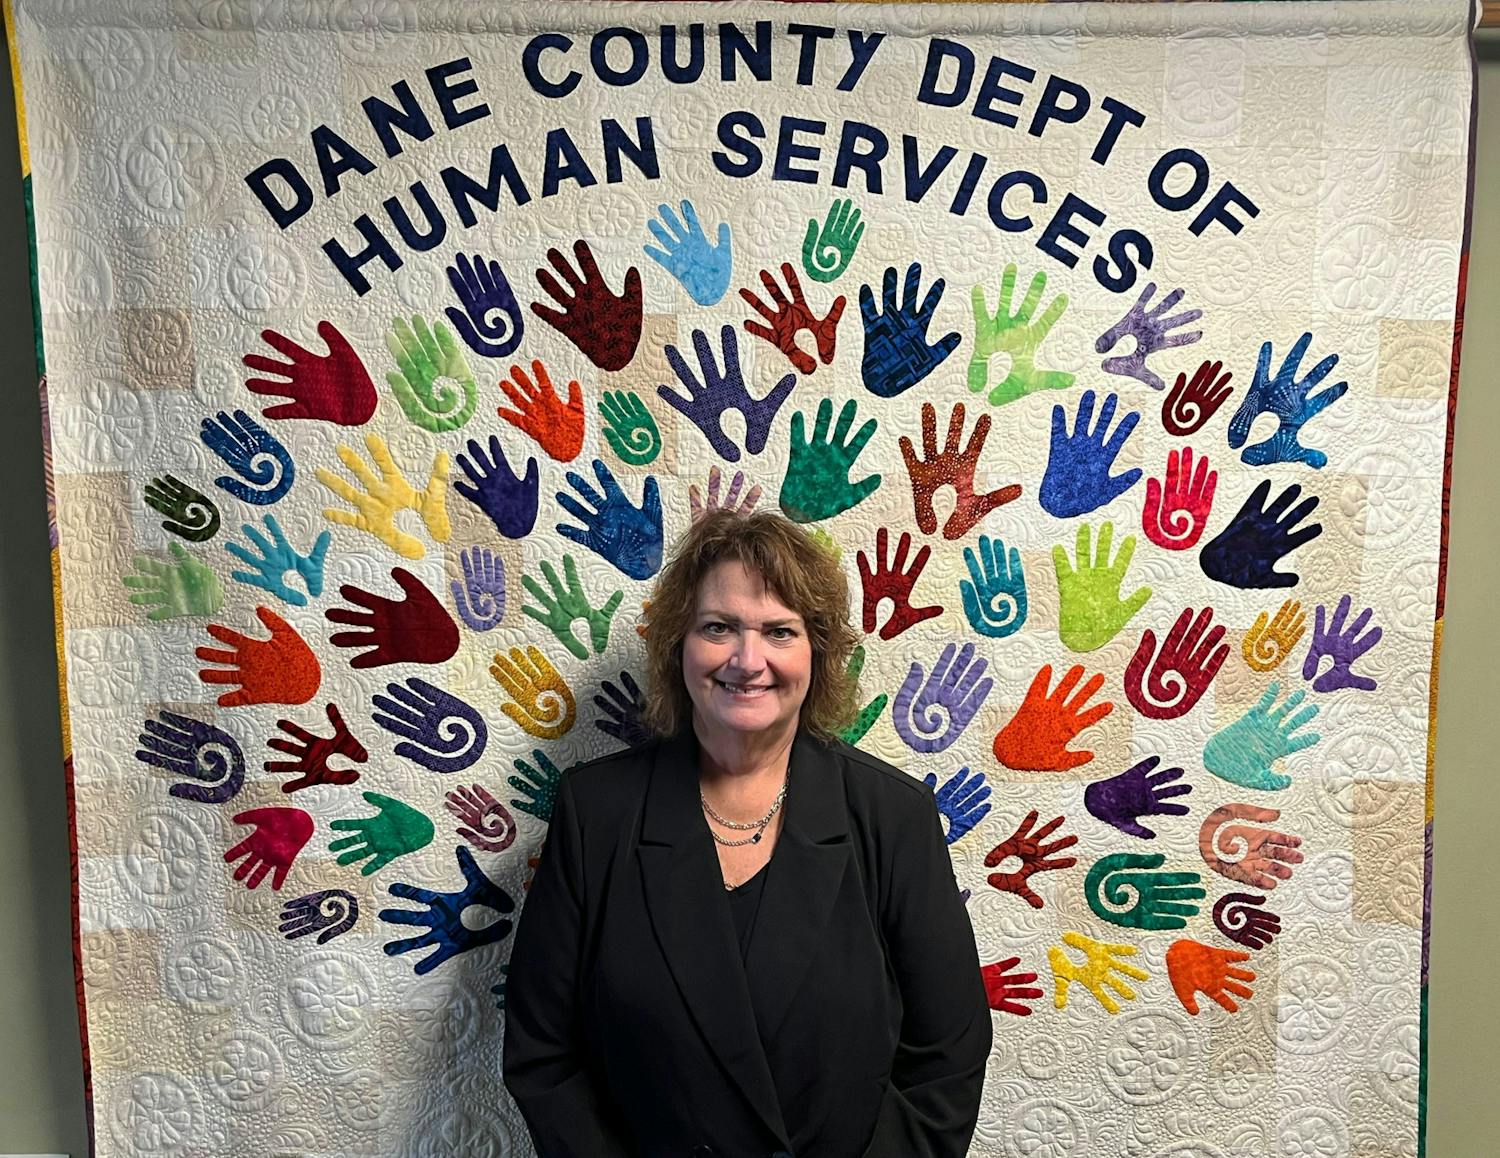 Dane County Dept of Human Services.jpg